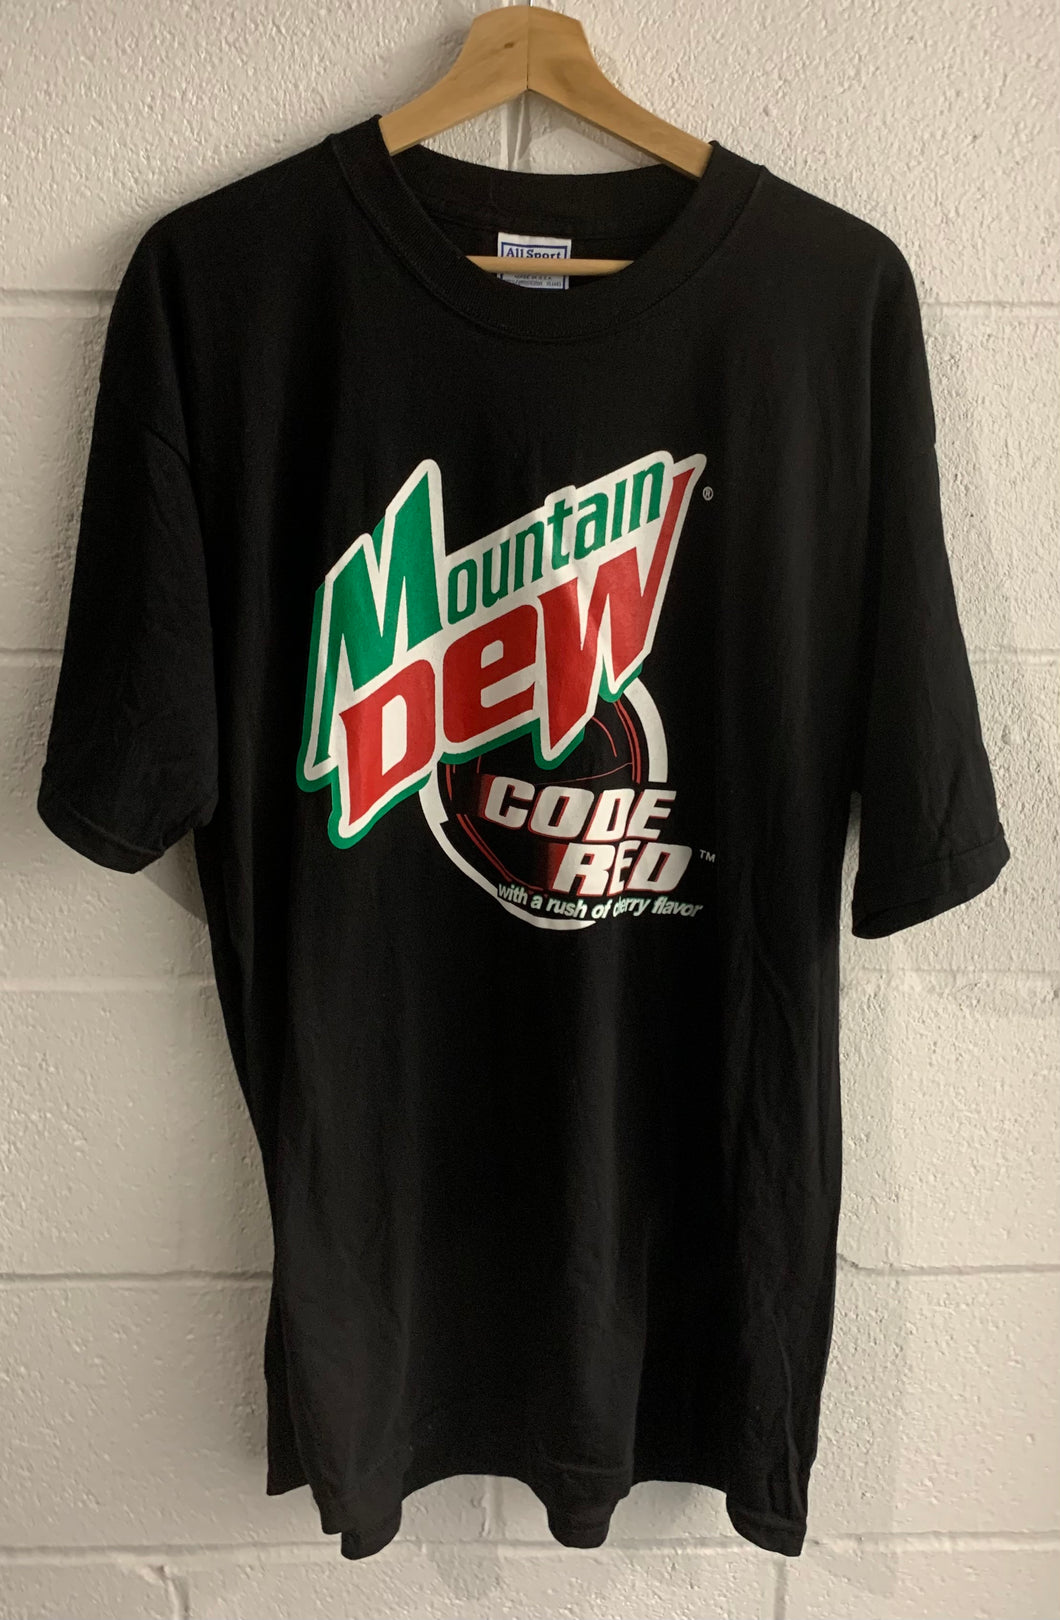 90s Mountain Dew Code Red Tee shirt